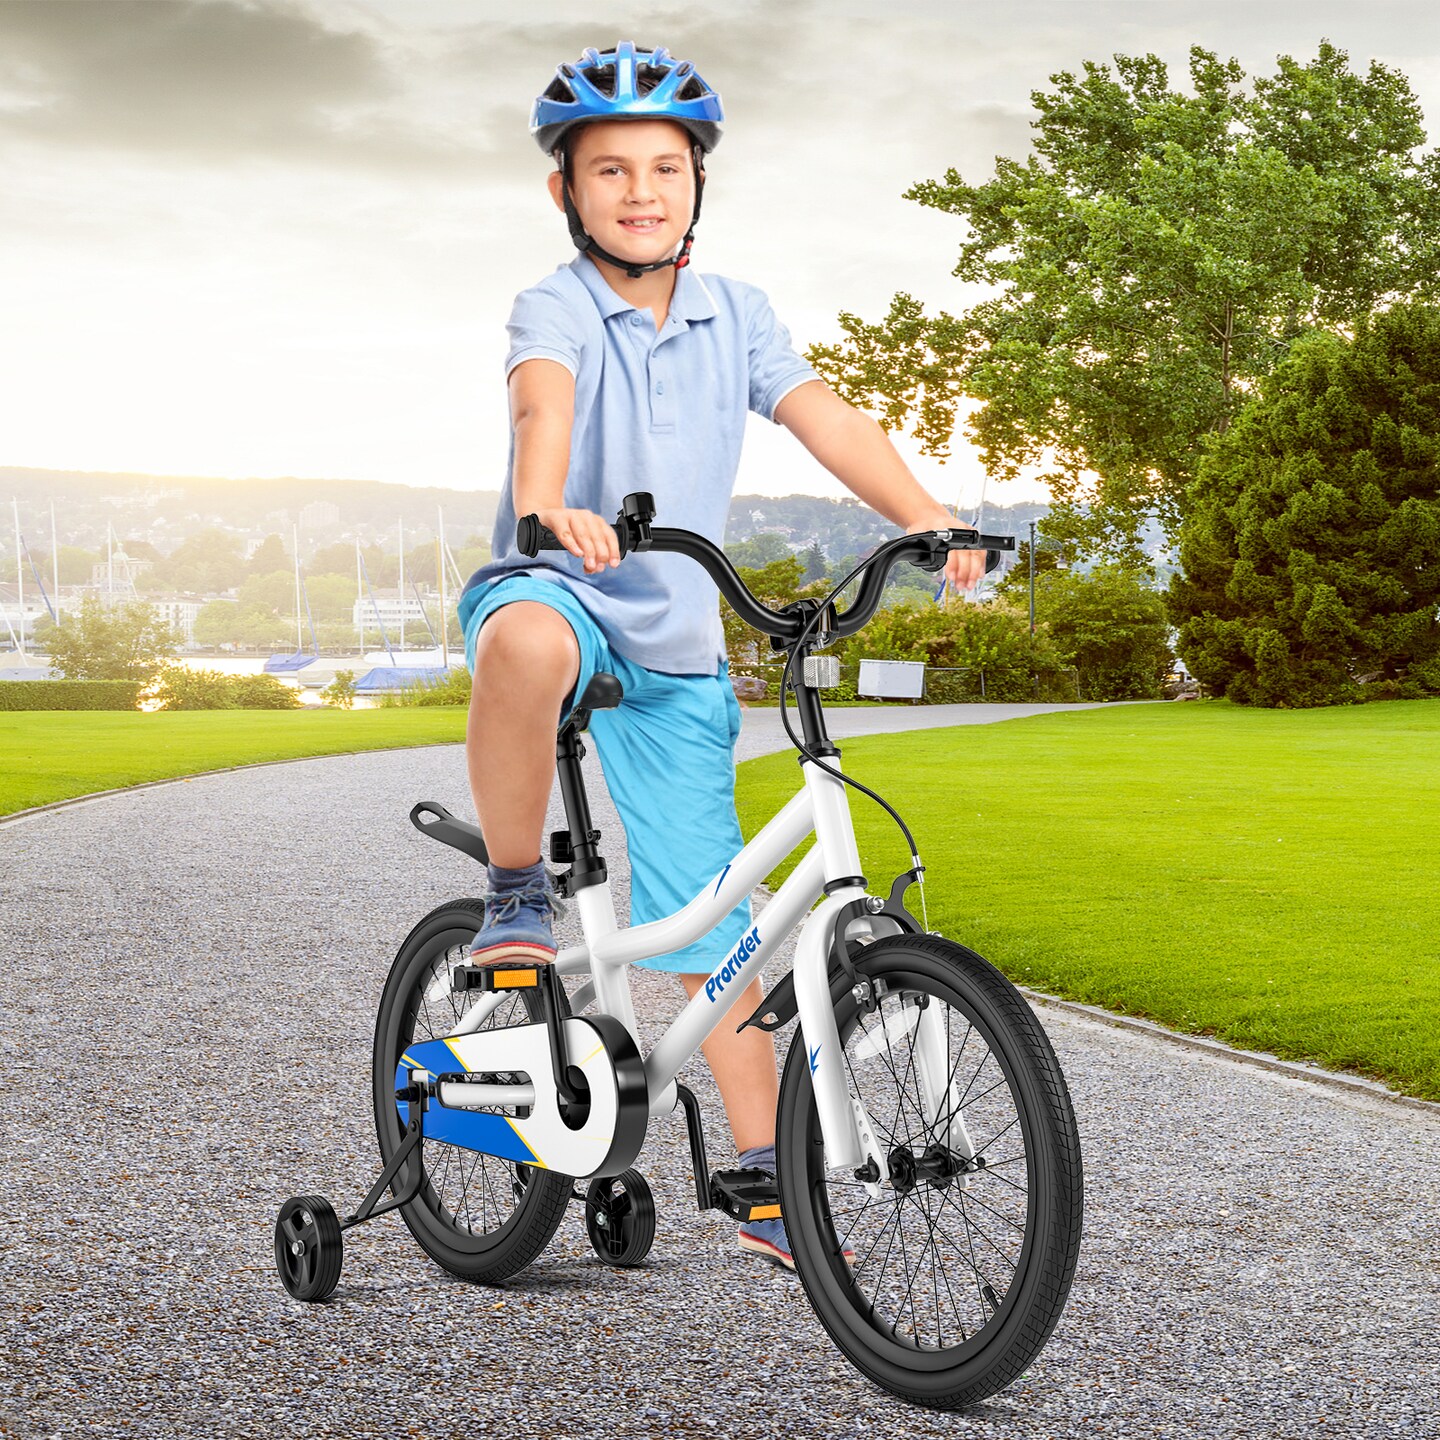 18 Feet Kid's Bike with Removable Training Wheels